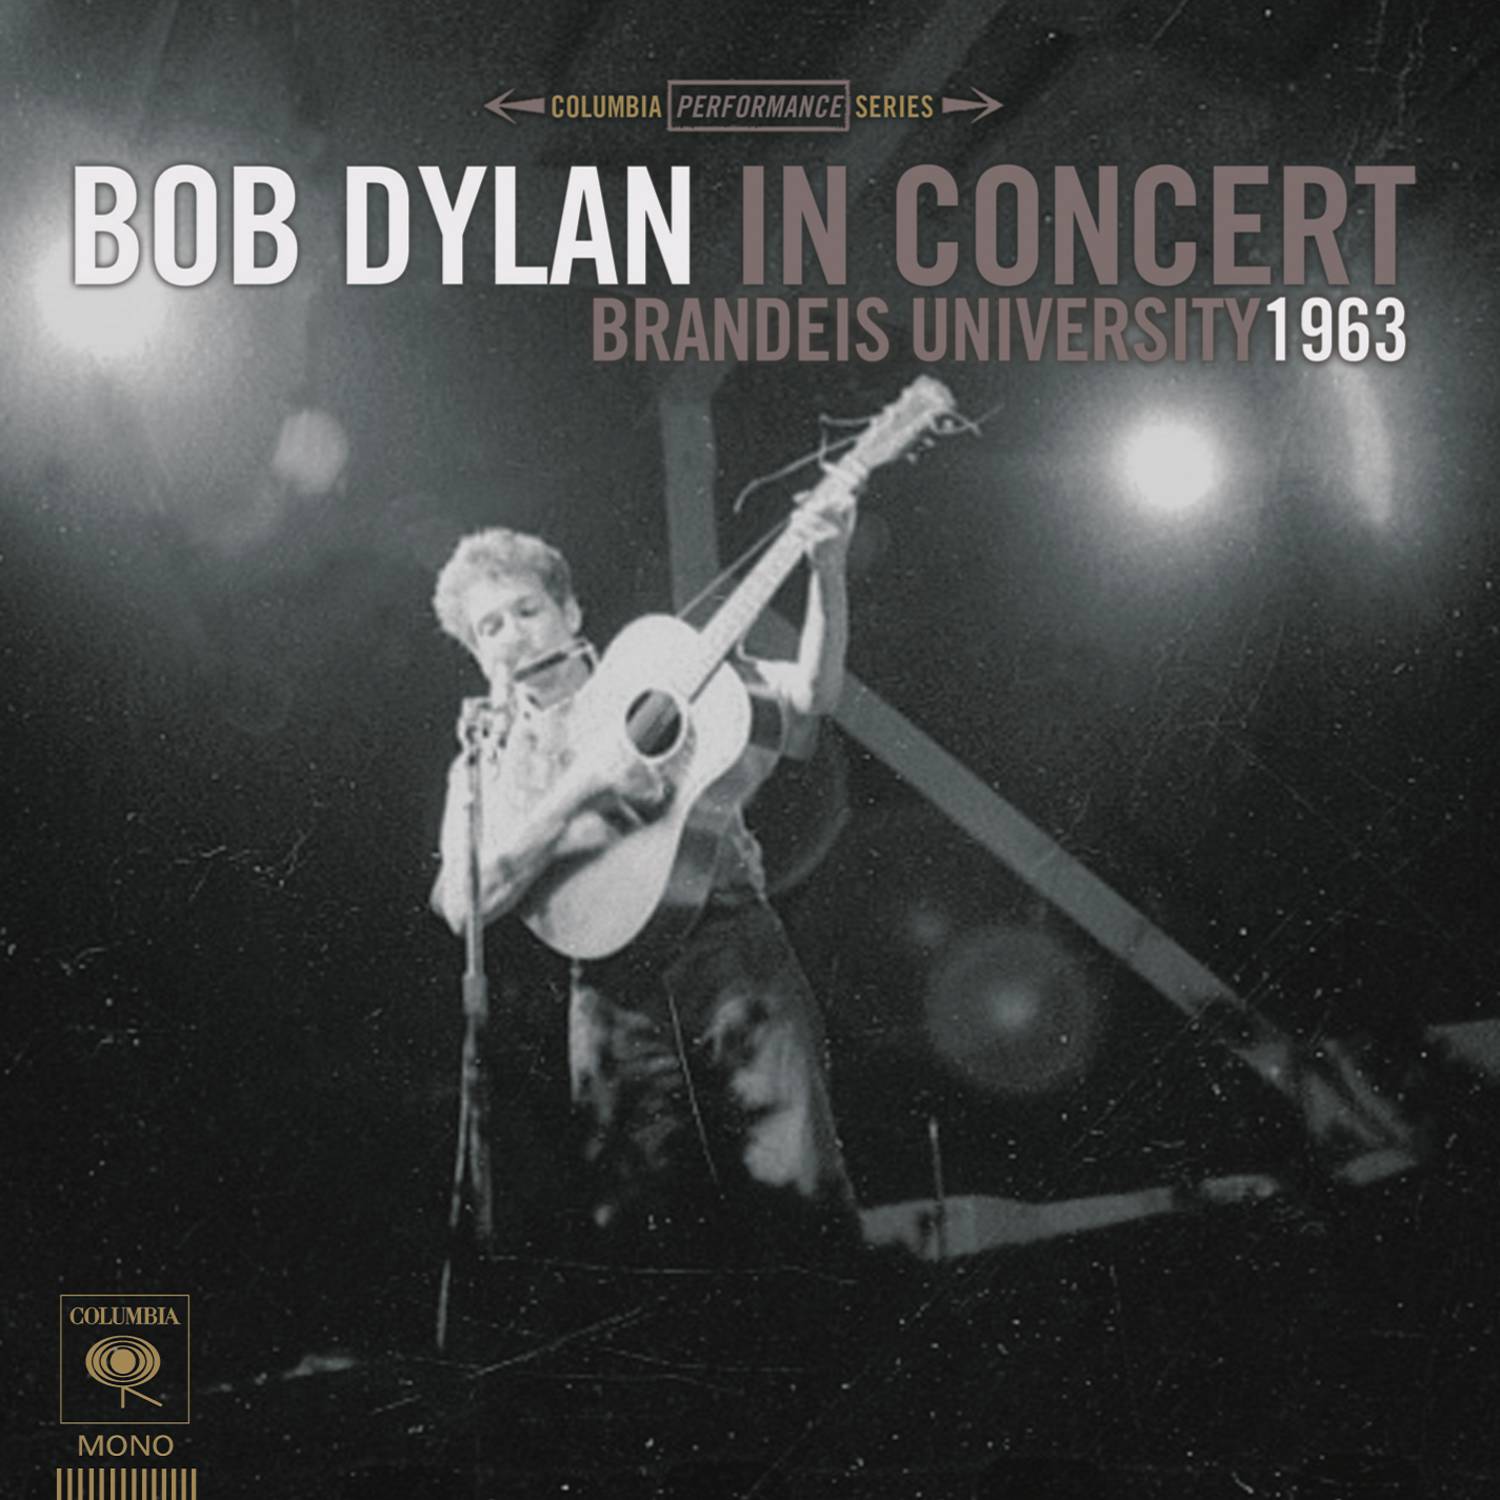 Bob Dylan's Dream (Live at Brandeis University)